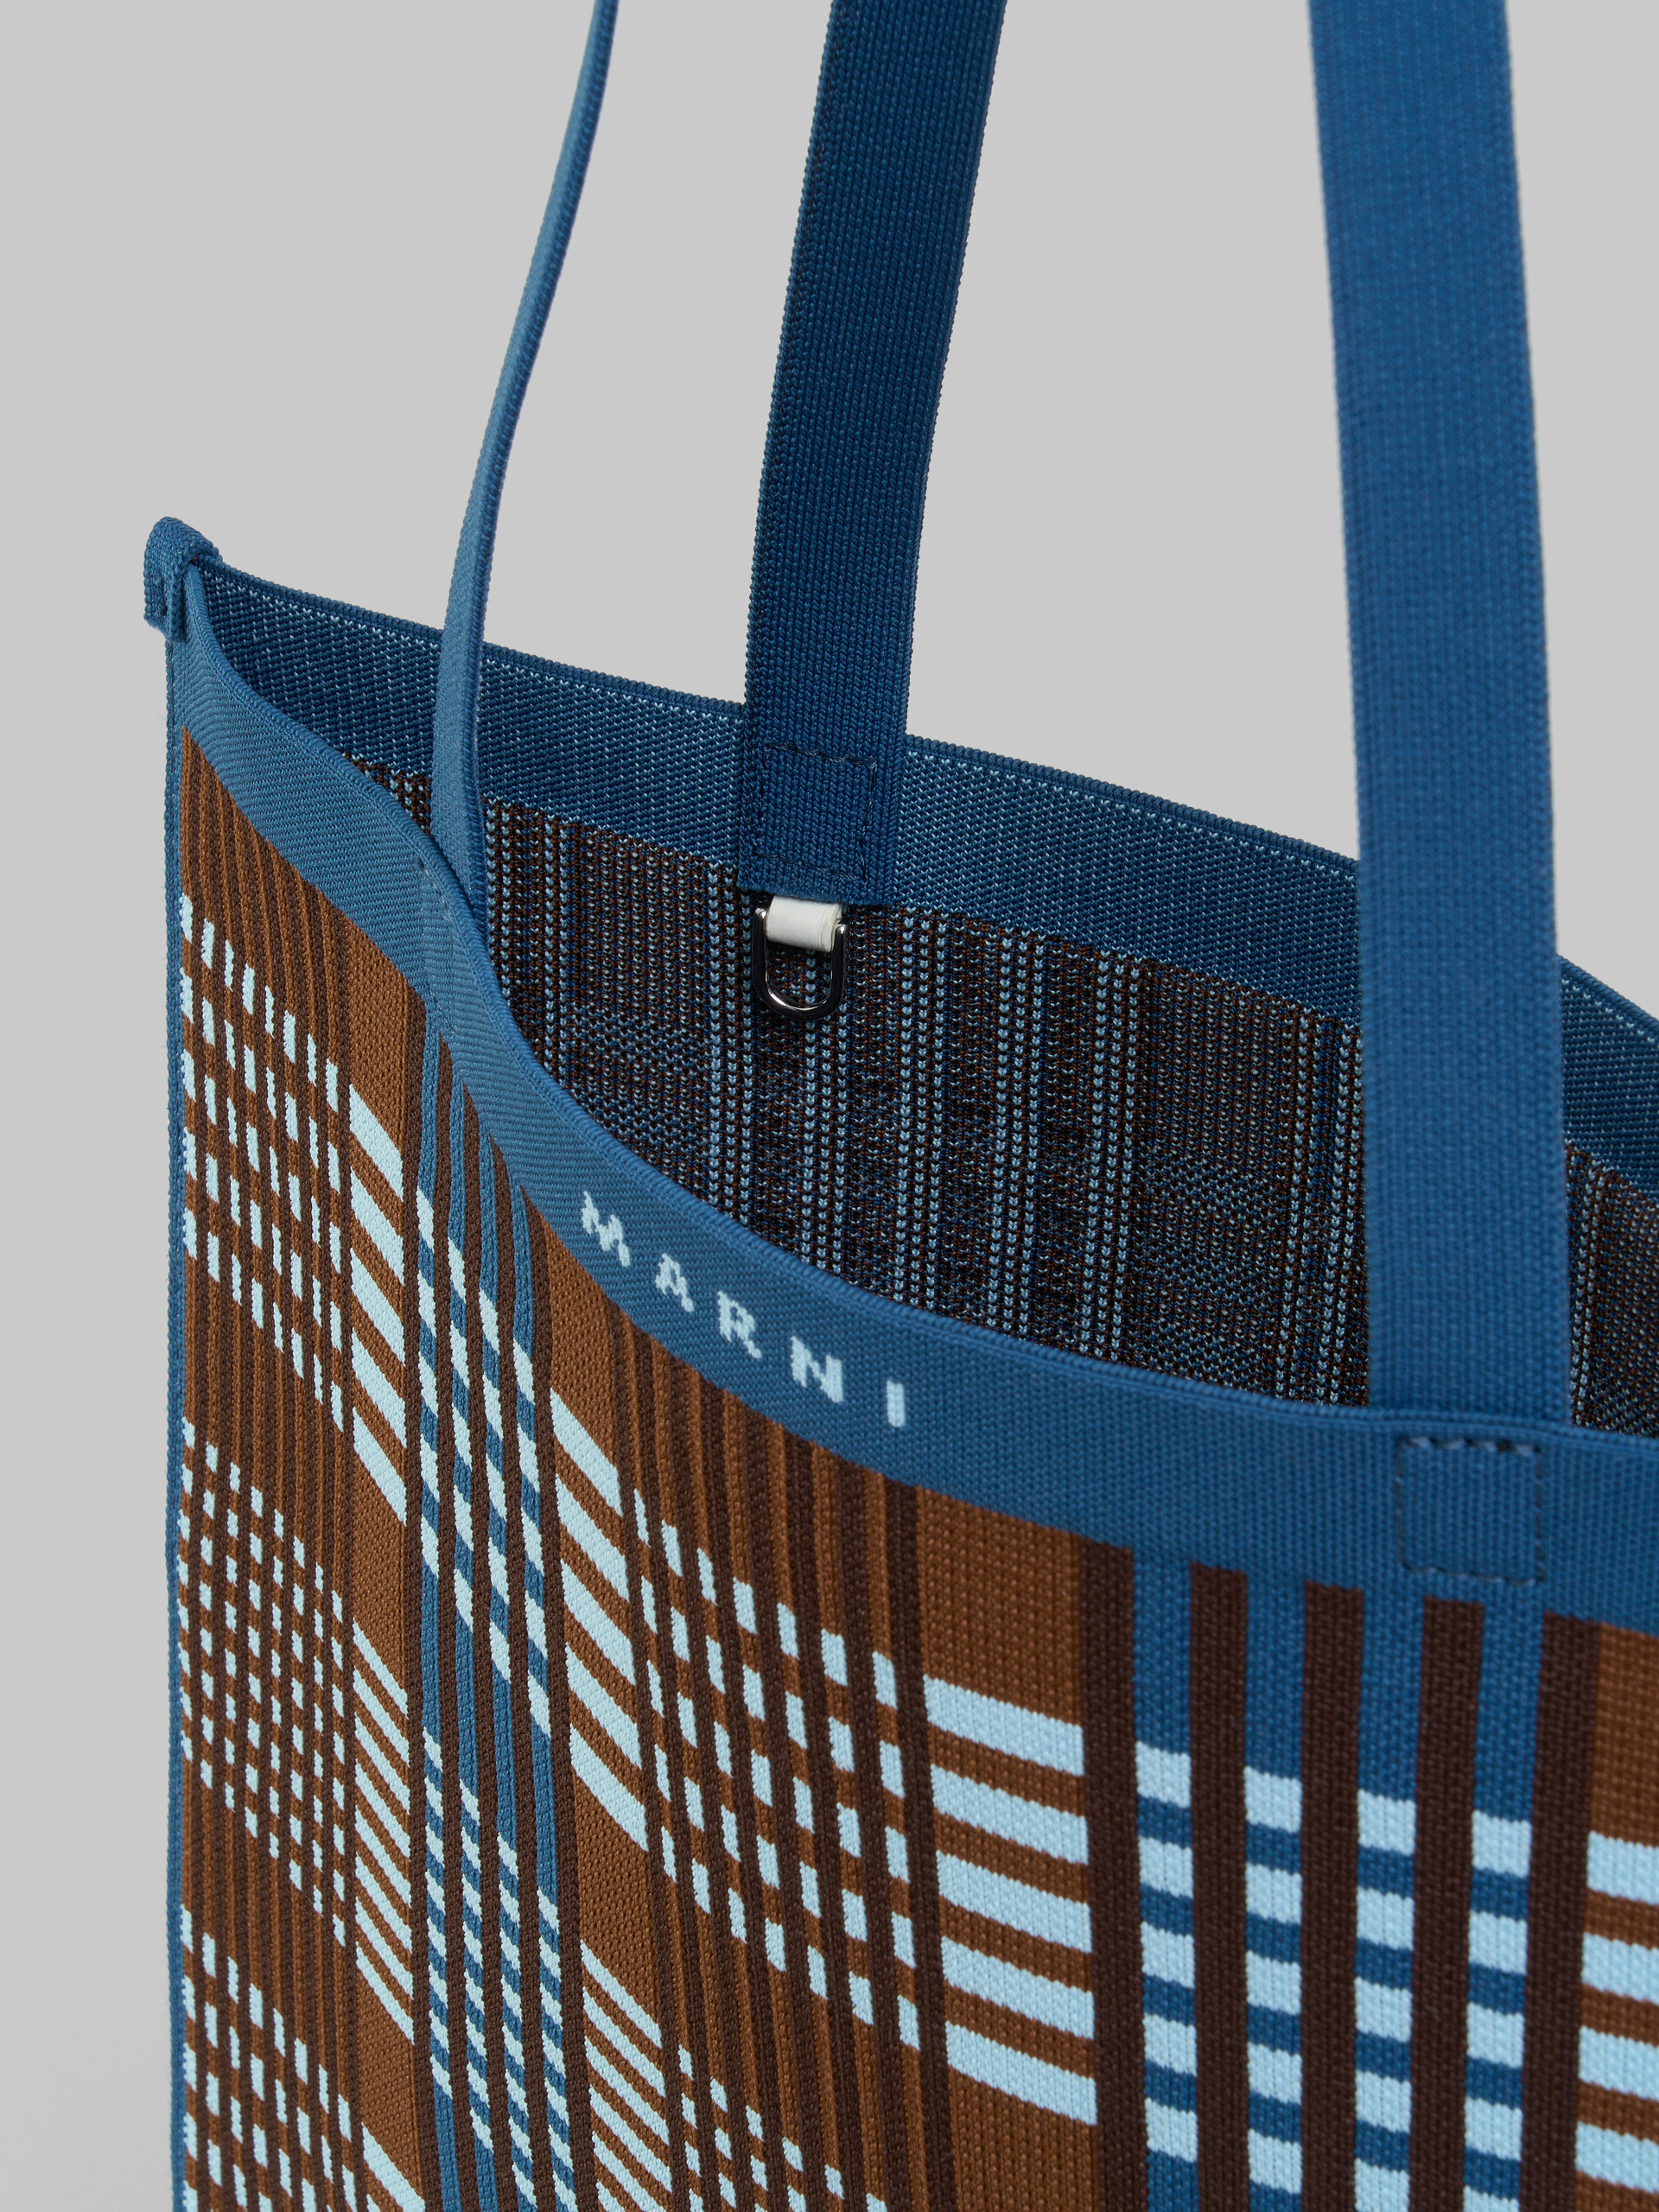 Blue and brown jacquard check flat tote bag - Shopping Bags - Image 4